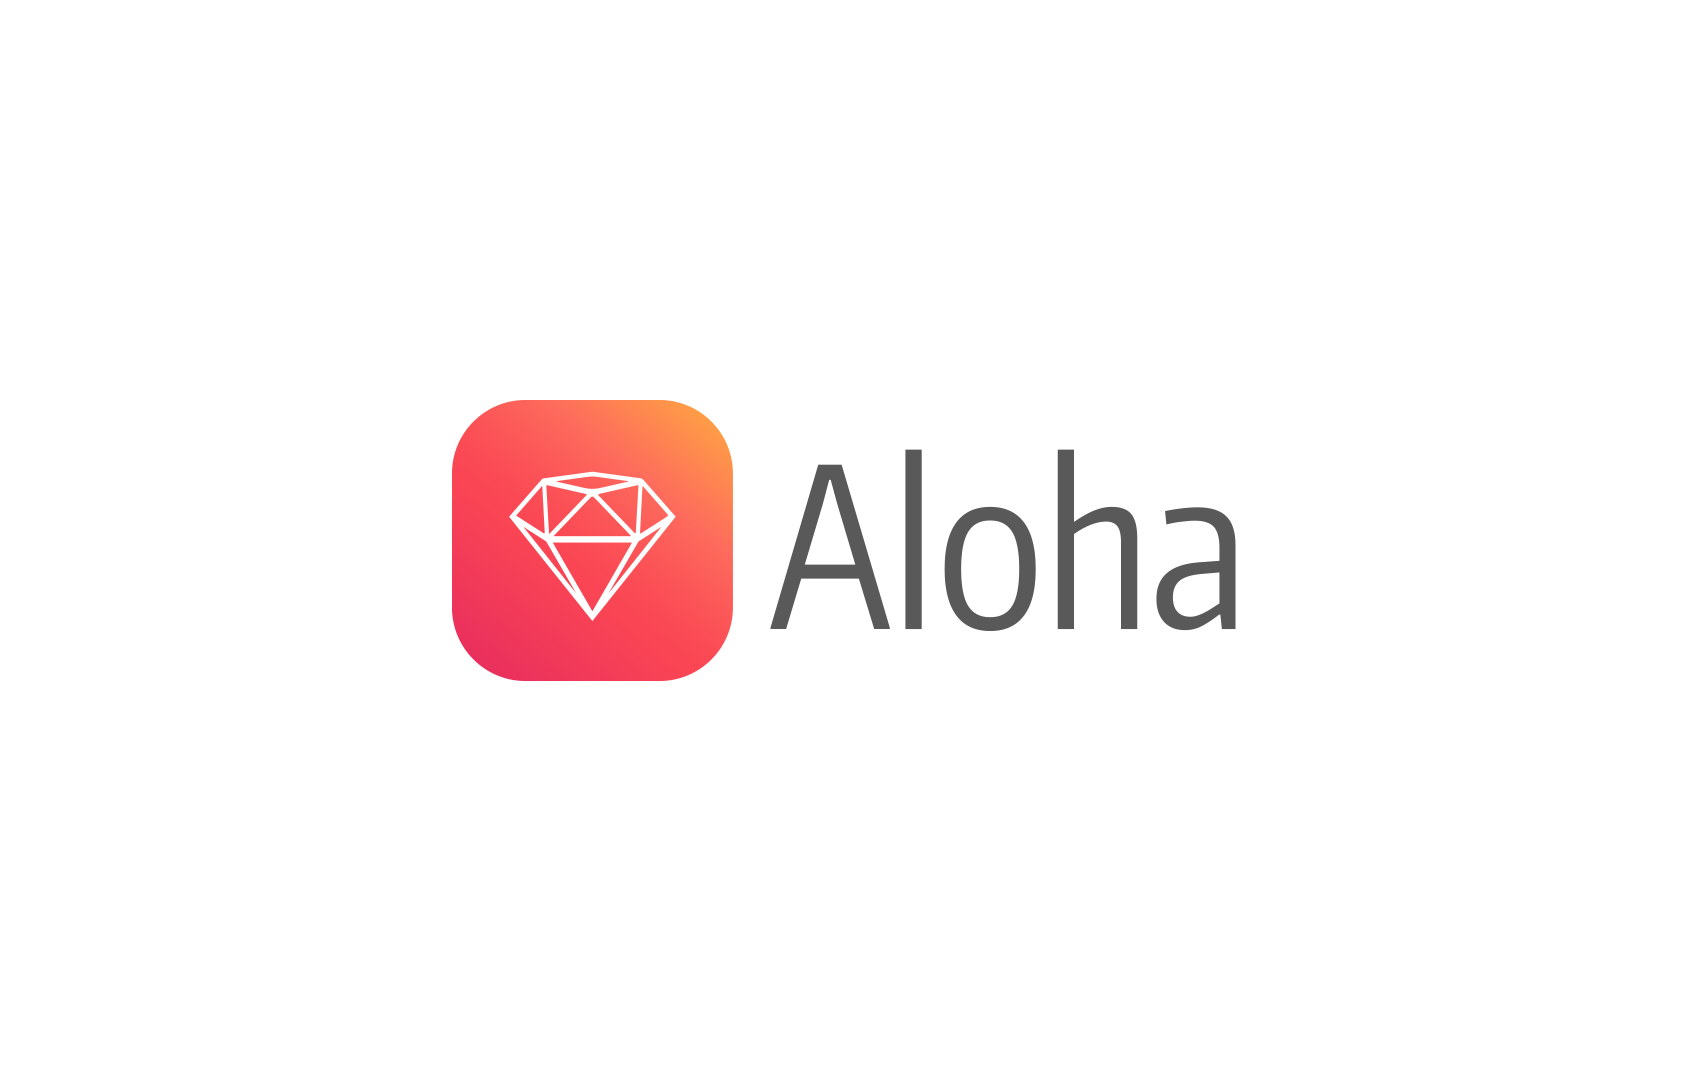 Aloha(社交軟體)